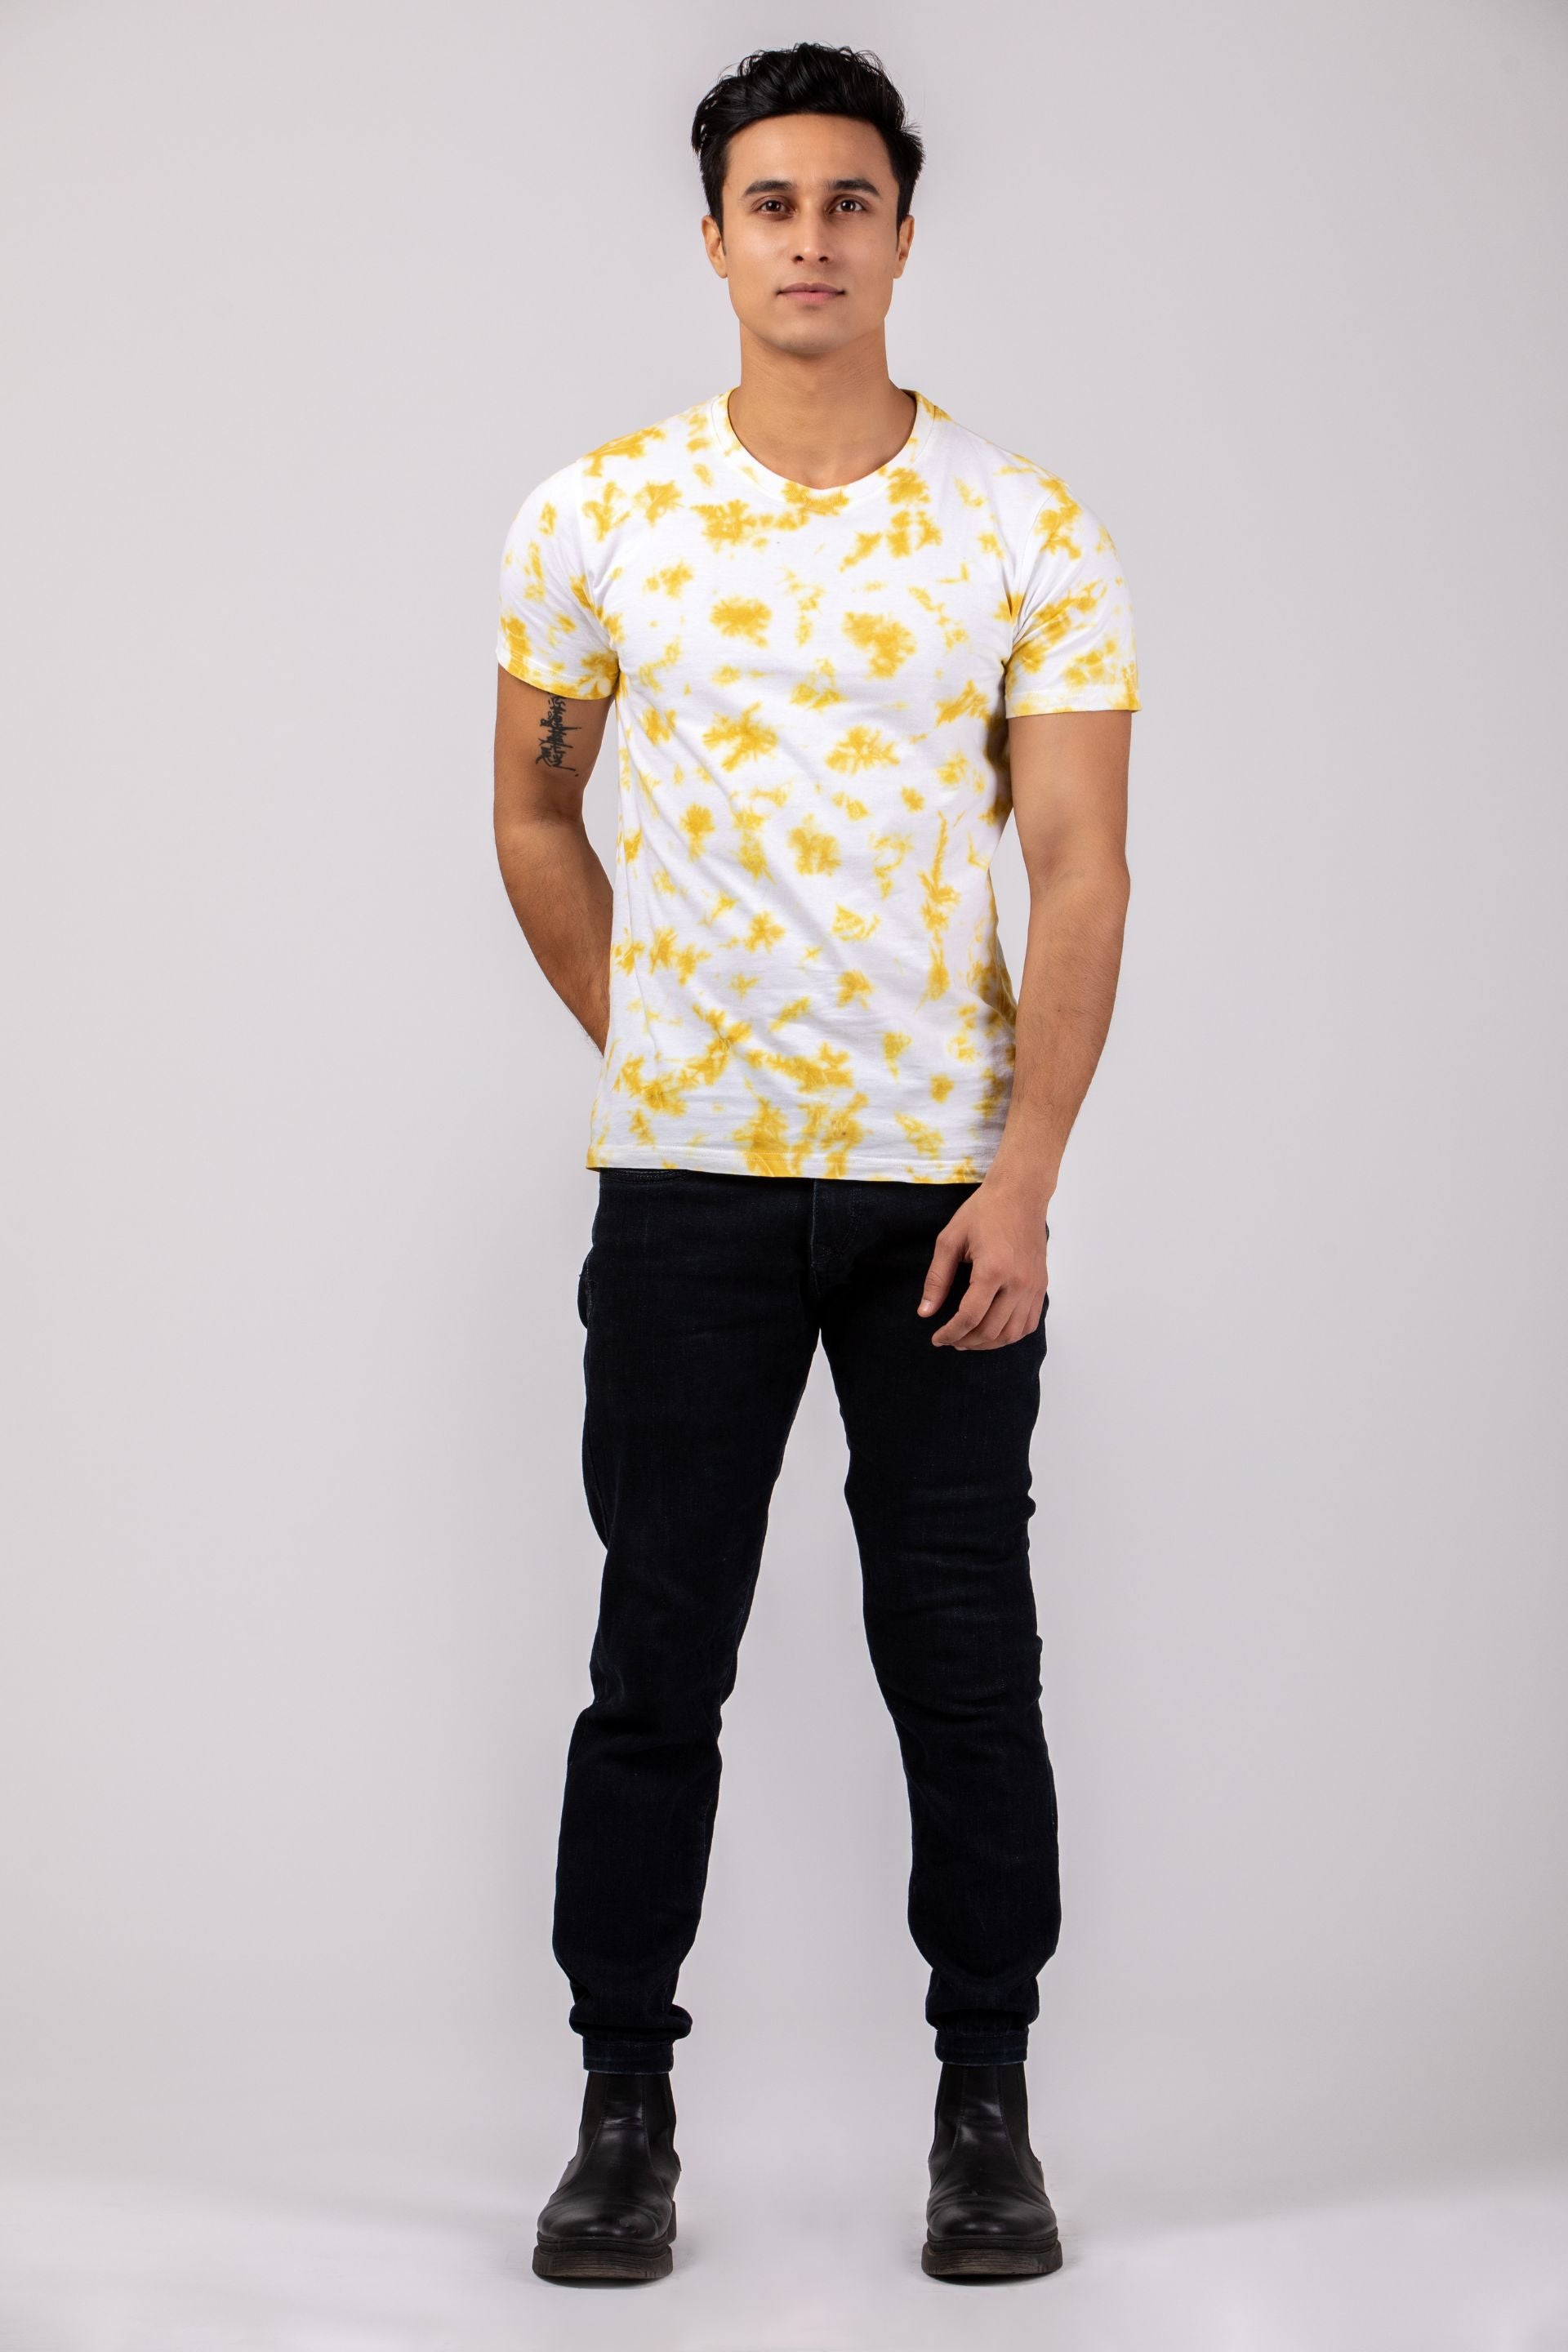 Firangi Yarn Handmade Cotton Tie-Dye Canary Colored T-shirt- Yellow